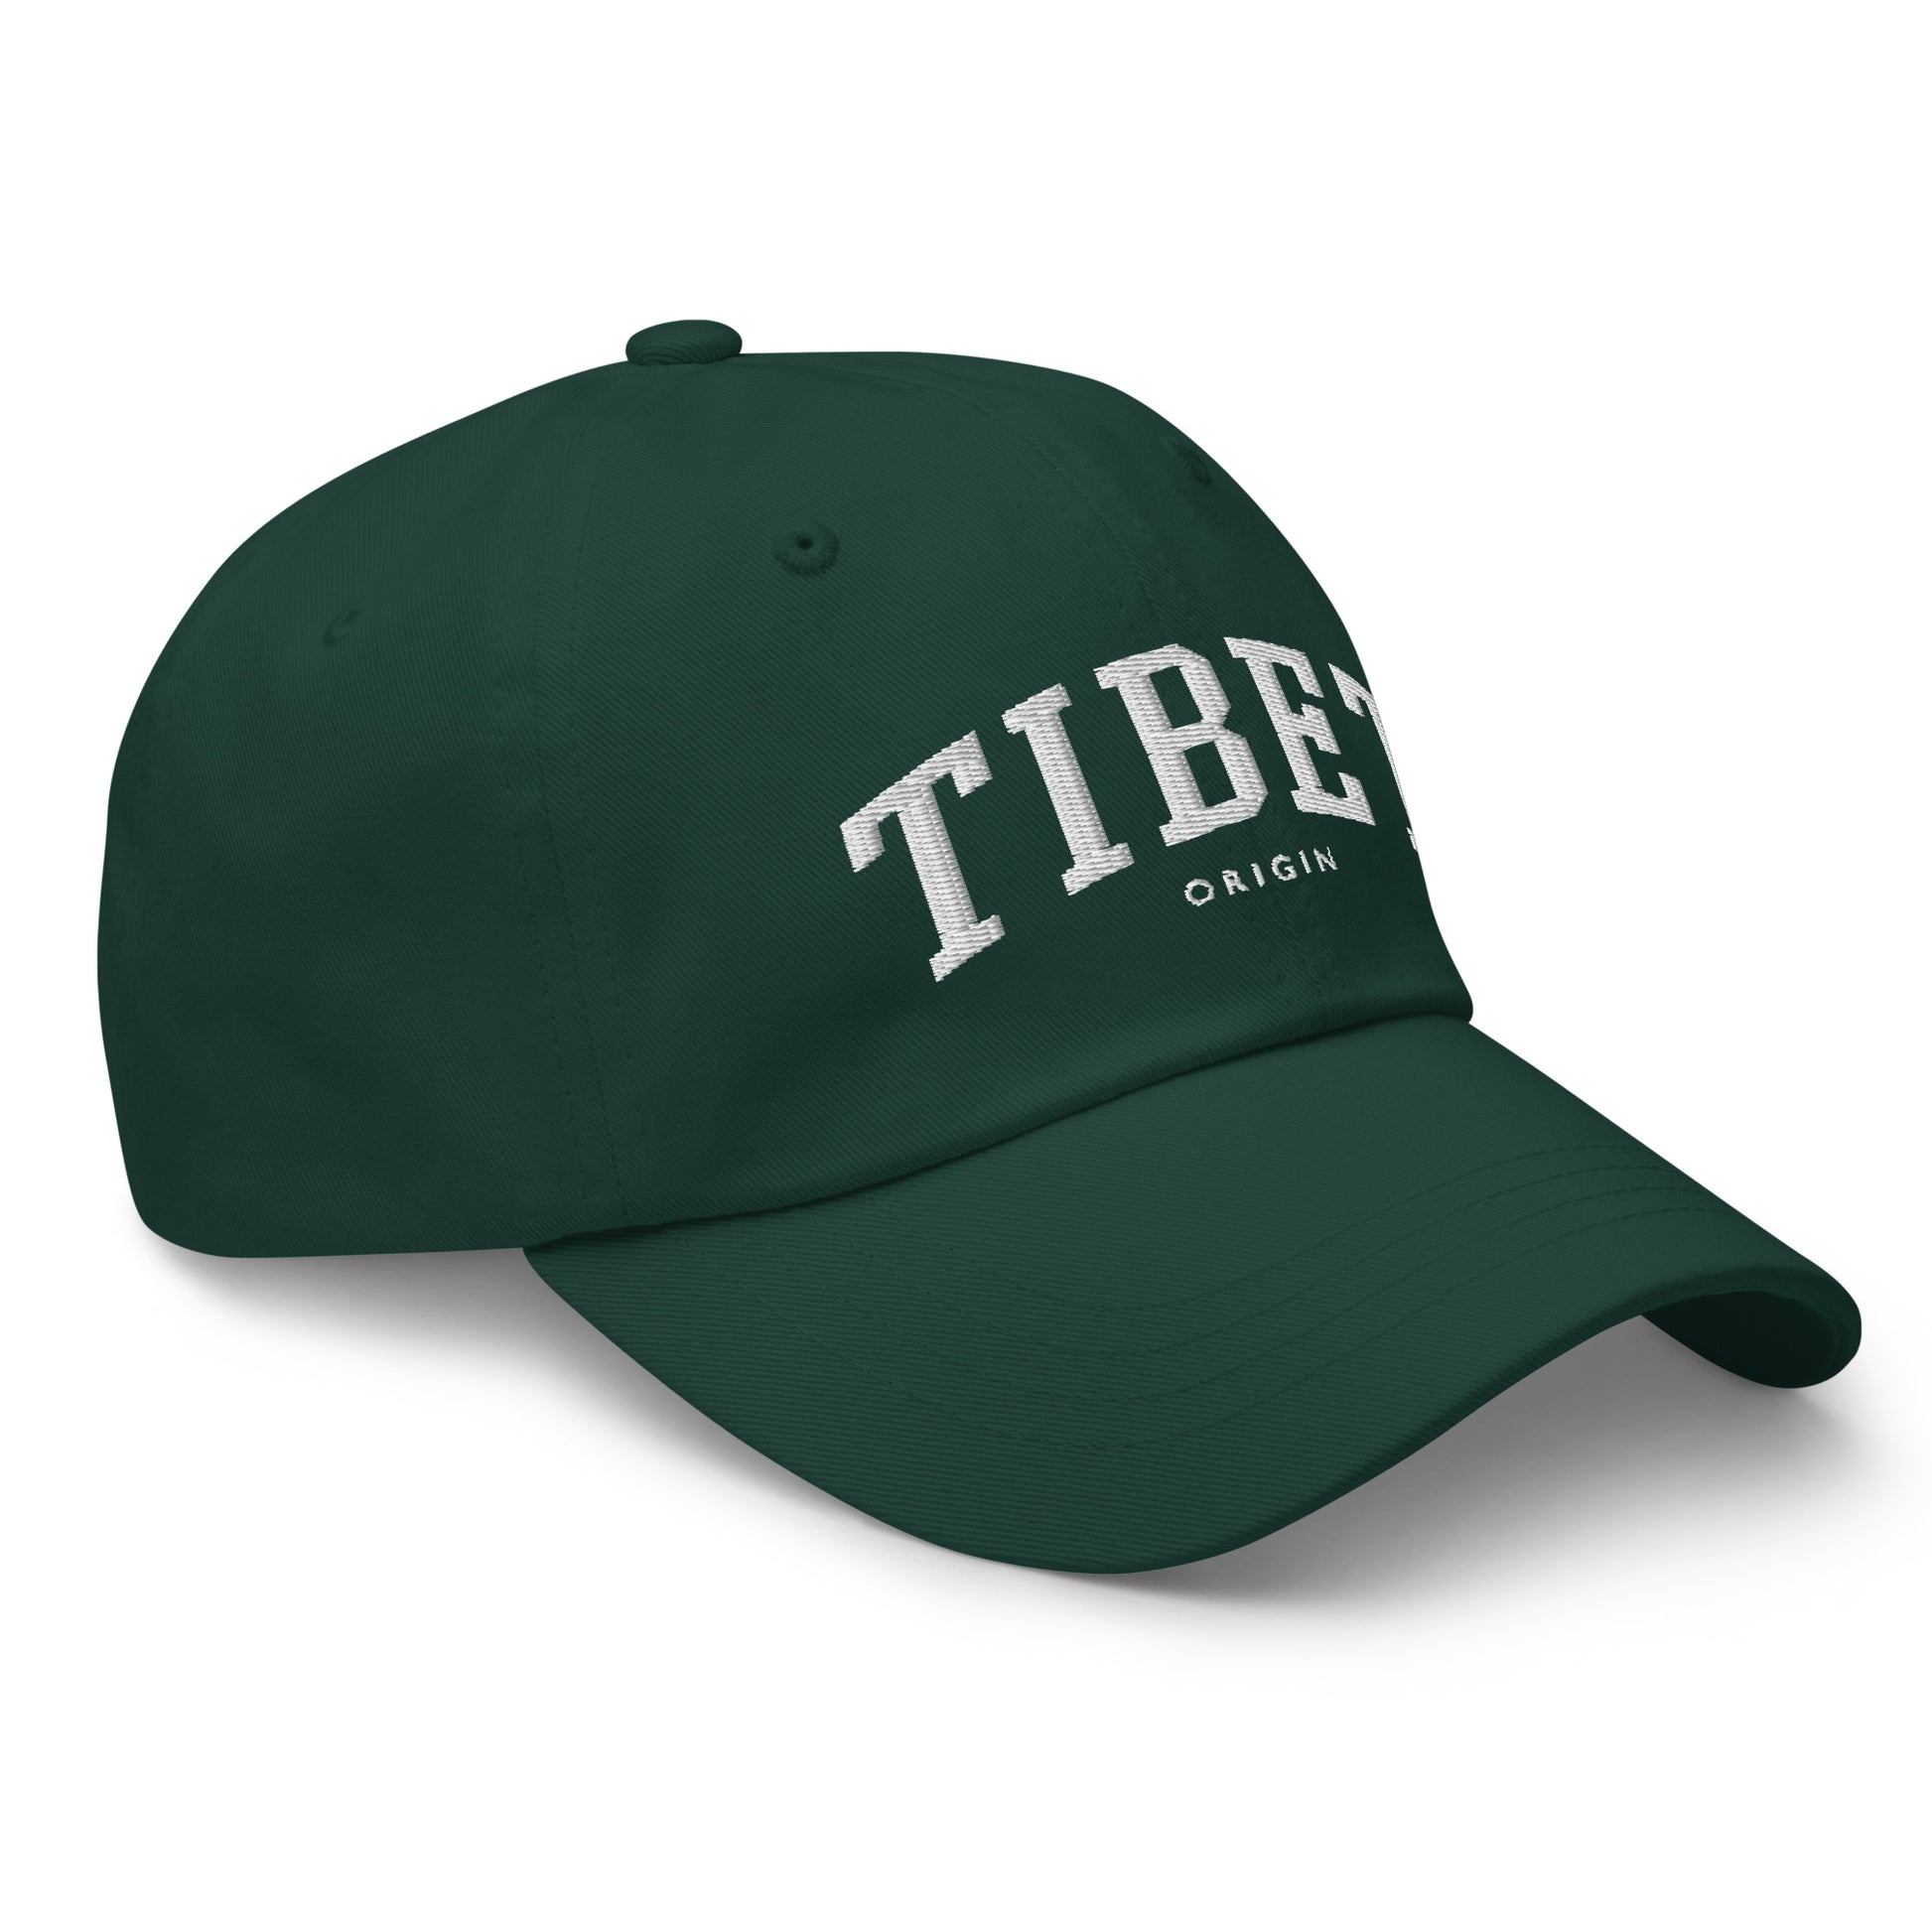 TIBET - TIBETAN - TIBET CLOTH - TIBET FASHION - TIBETAN HAT - TIBET CAP - TIBETAN CAP - TIBETAN CULTURE - Tibet embroidered premium hat for daily wear